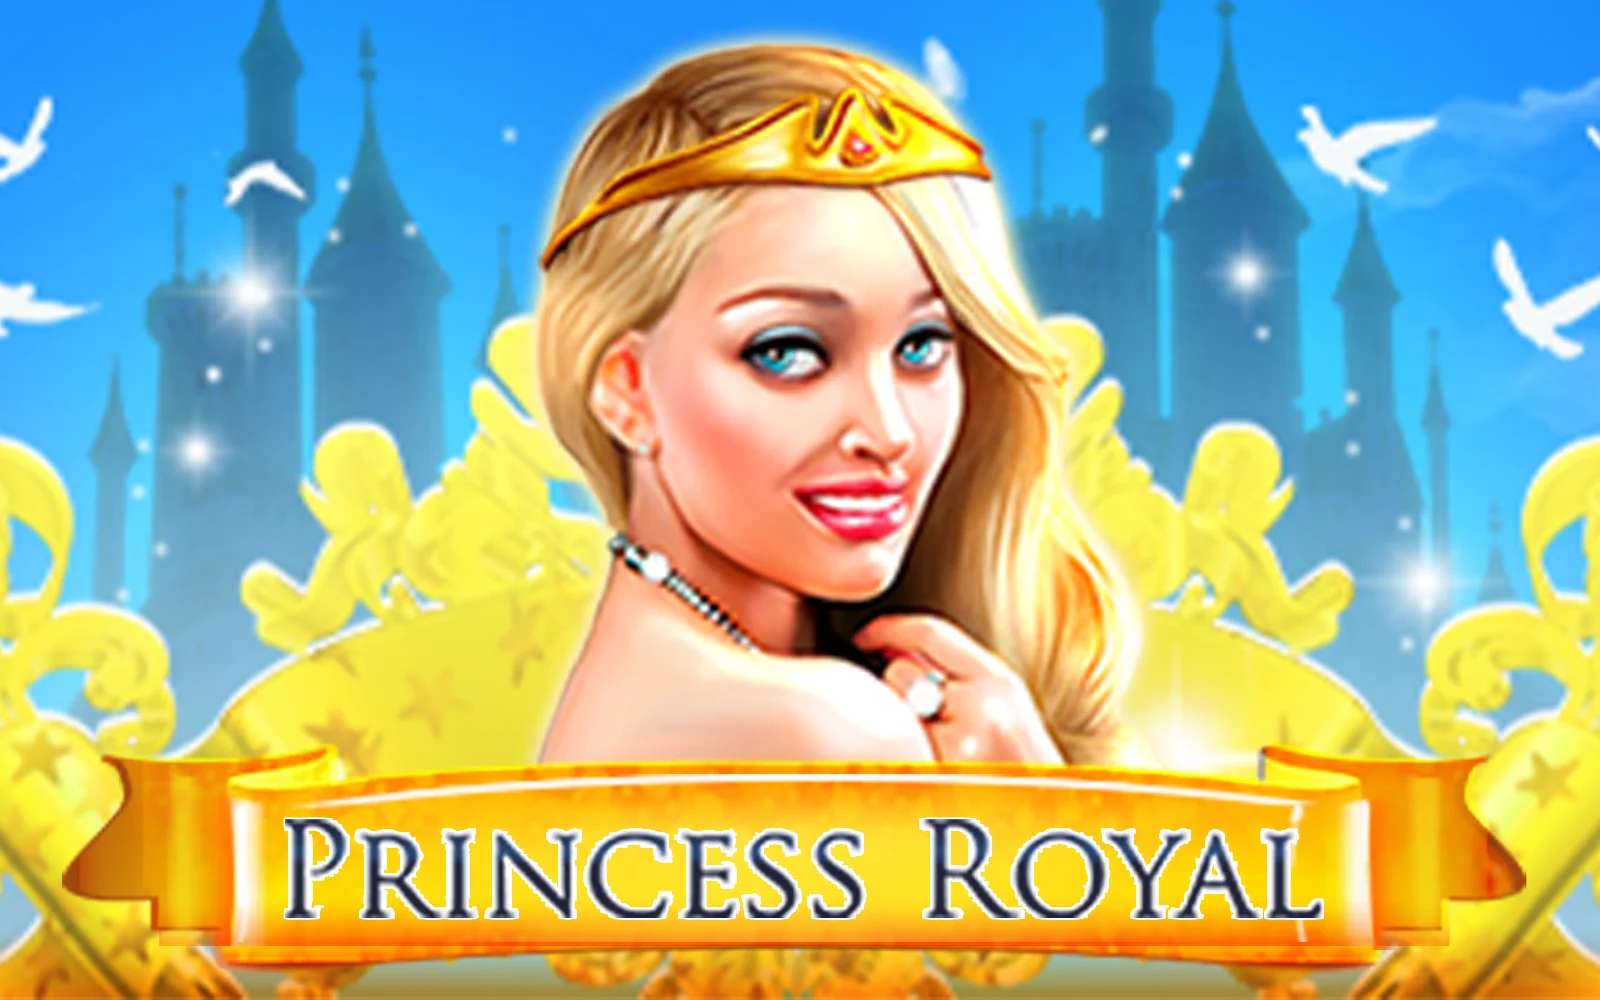 Joacă Princess Royal în cazinoul online Starcasino.be